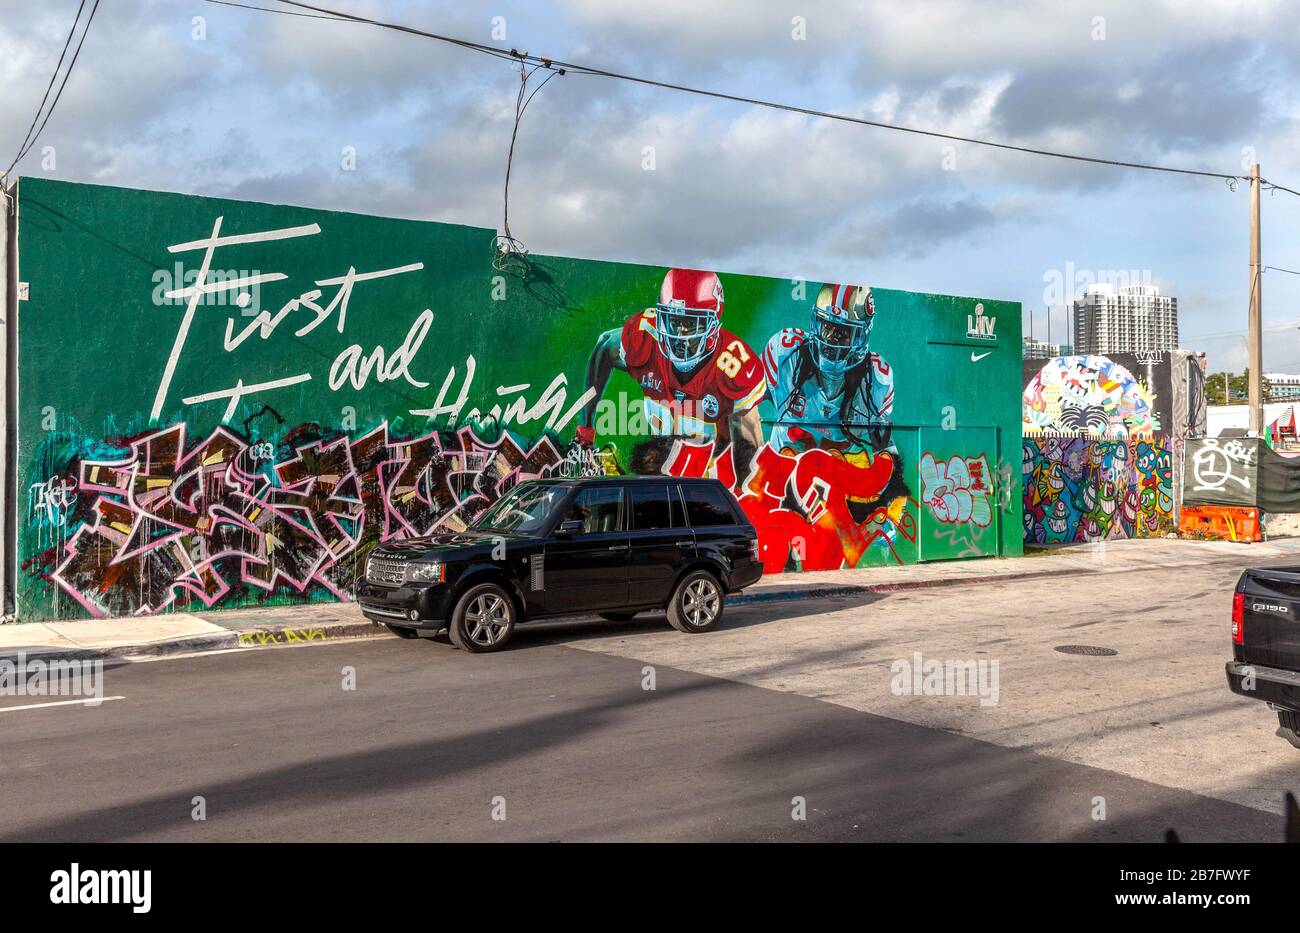 Wynwood Art District street scene, Wynwood neighborhood, Miami, Florida, USA. Stock Photo